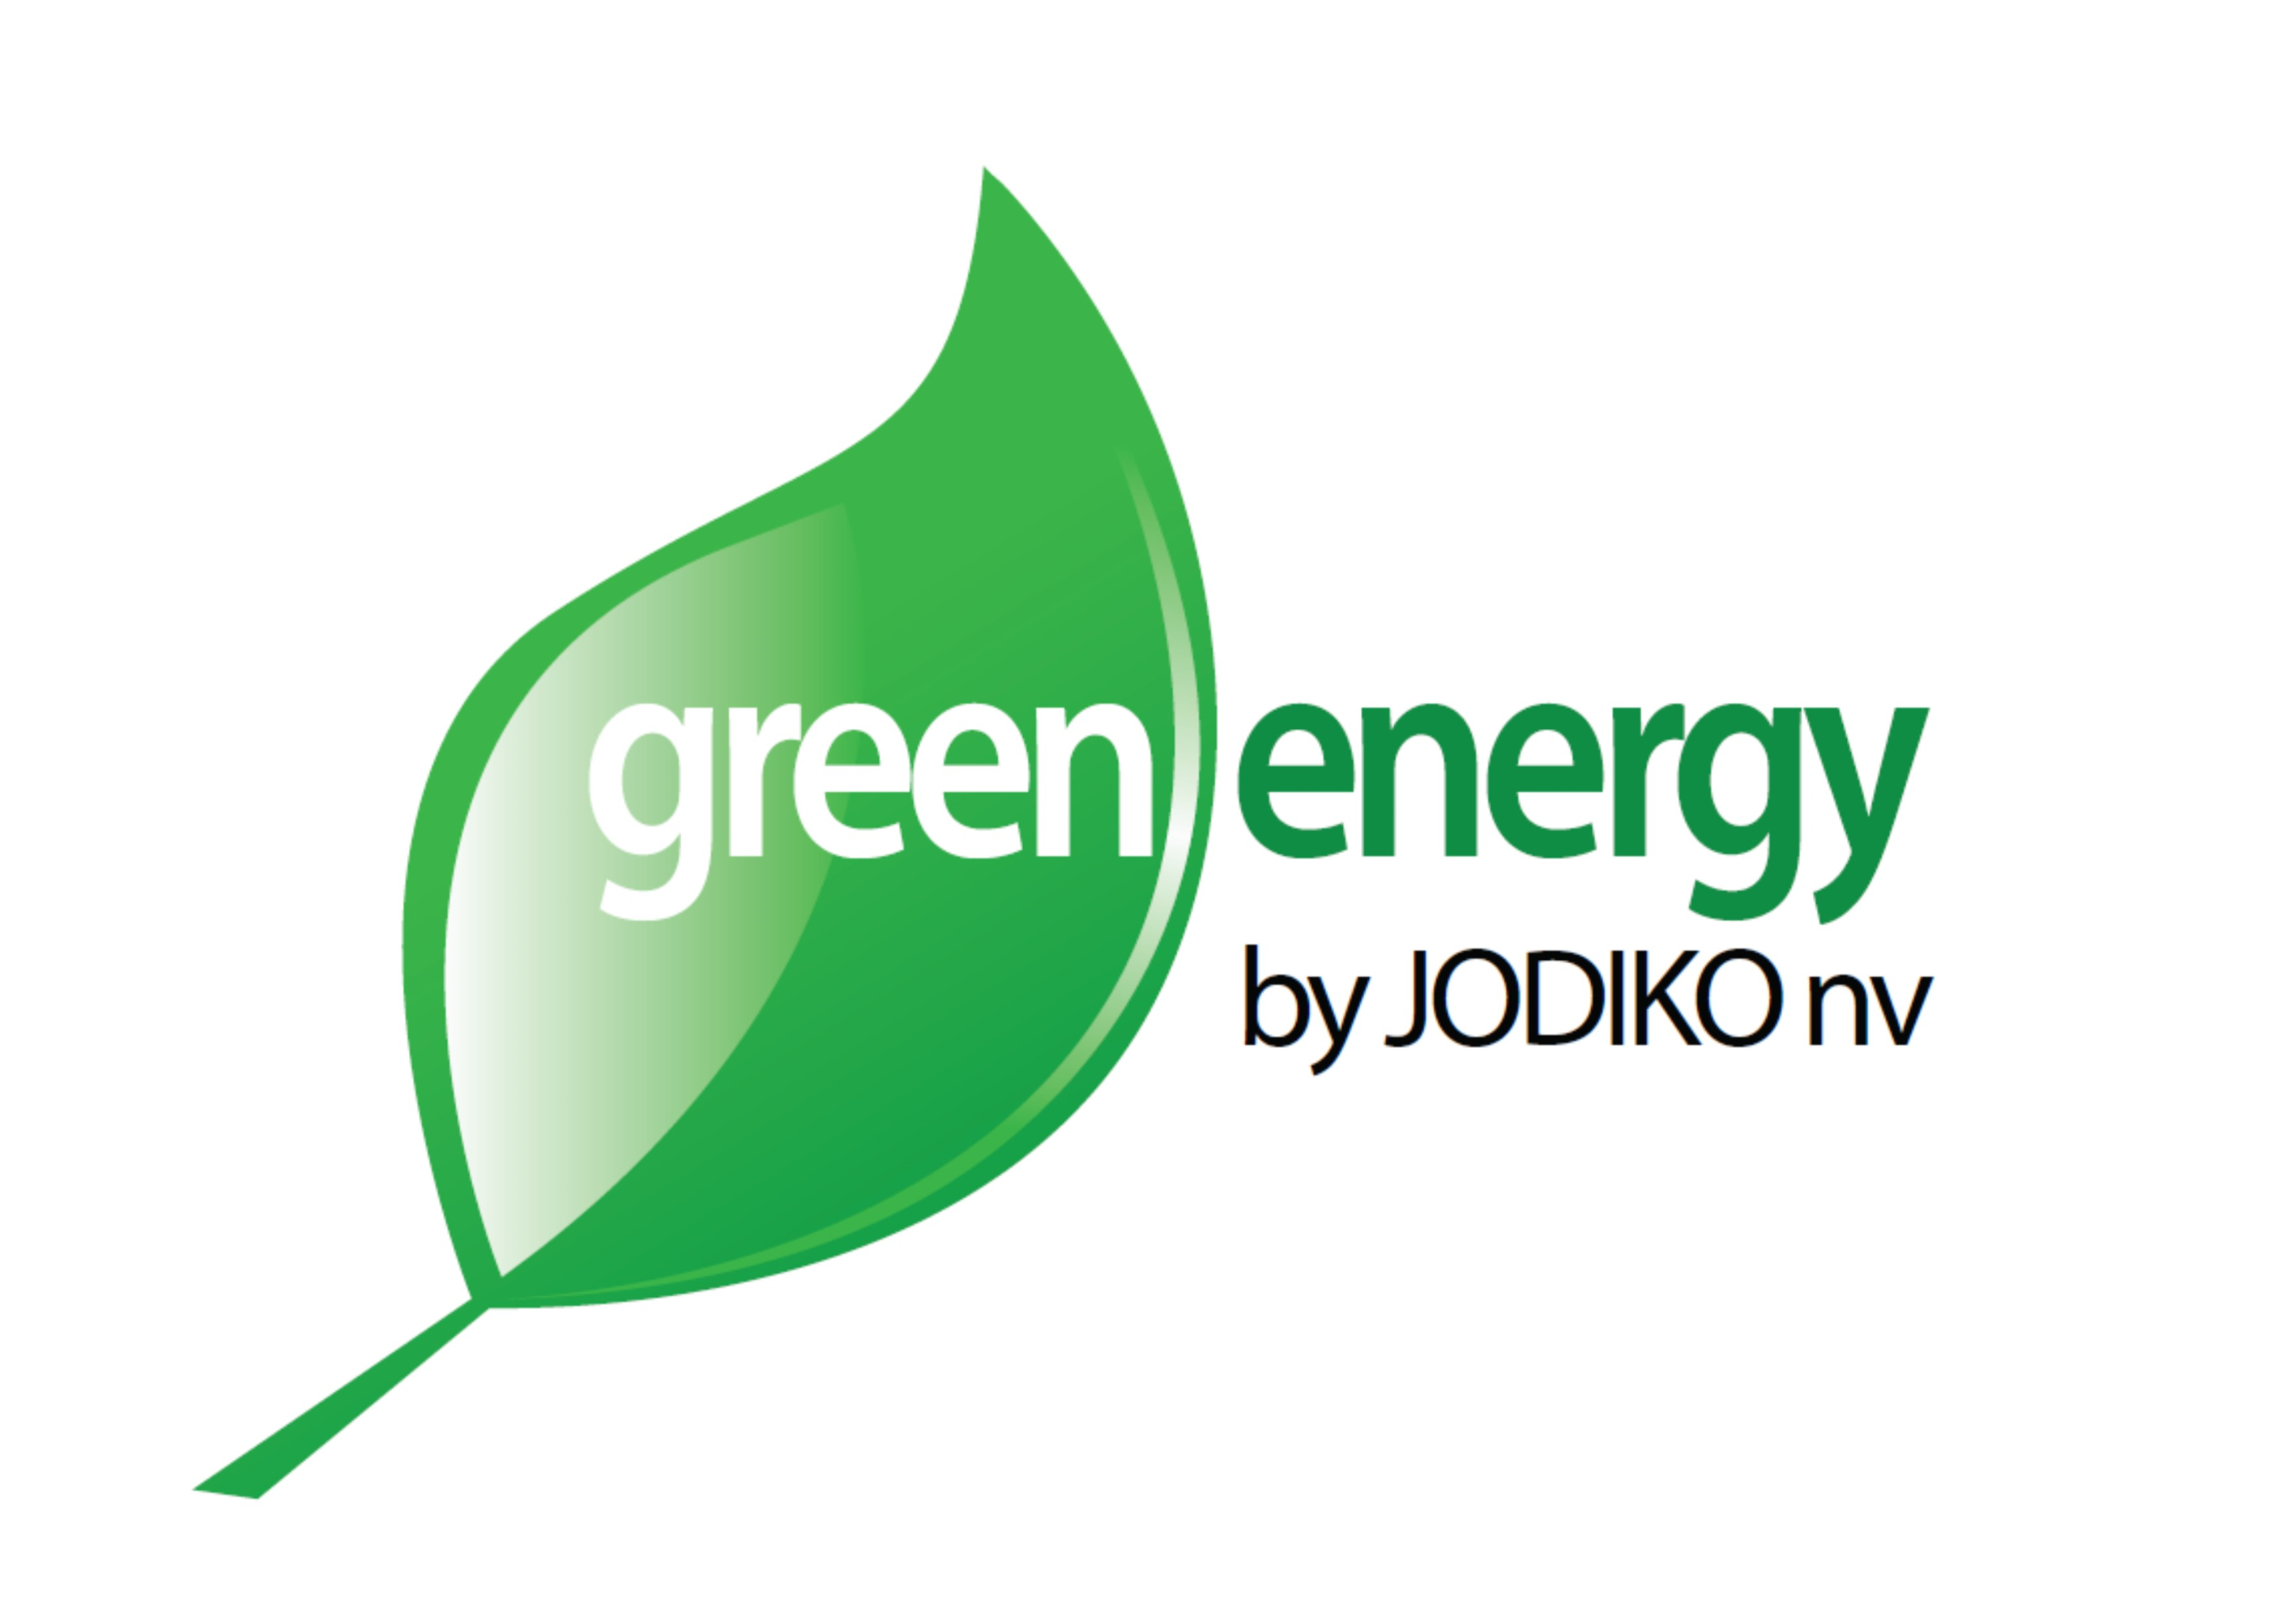 GreenEnergy by Jodiko nv